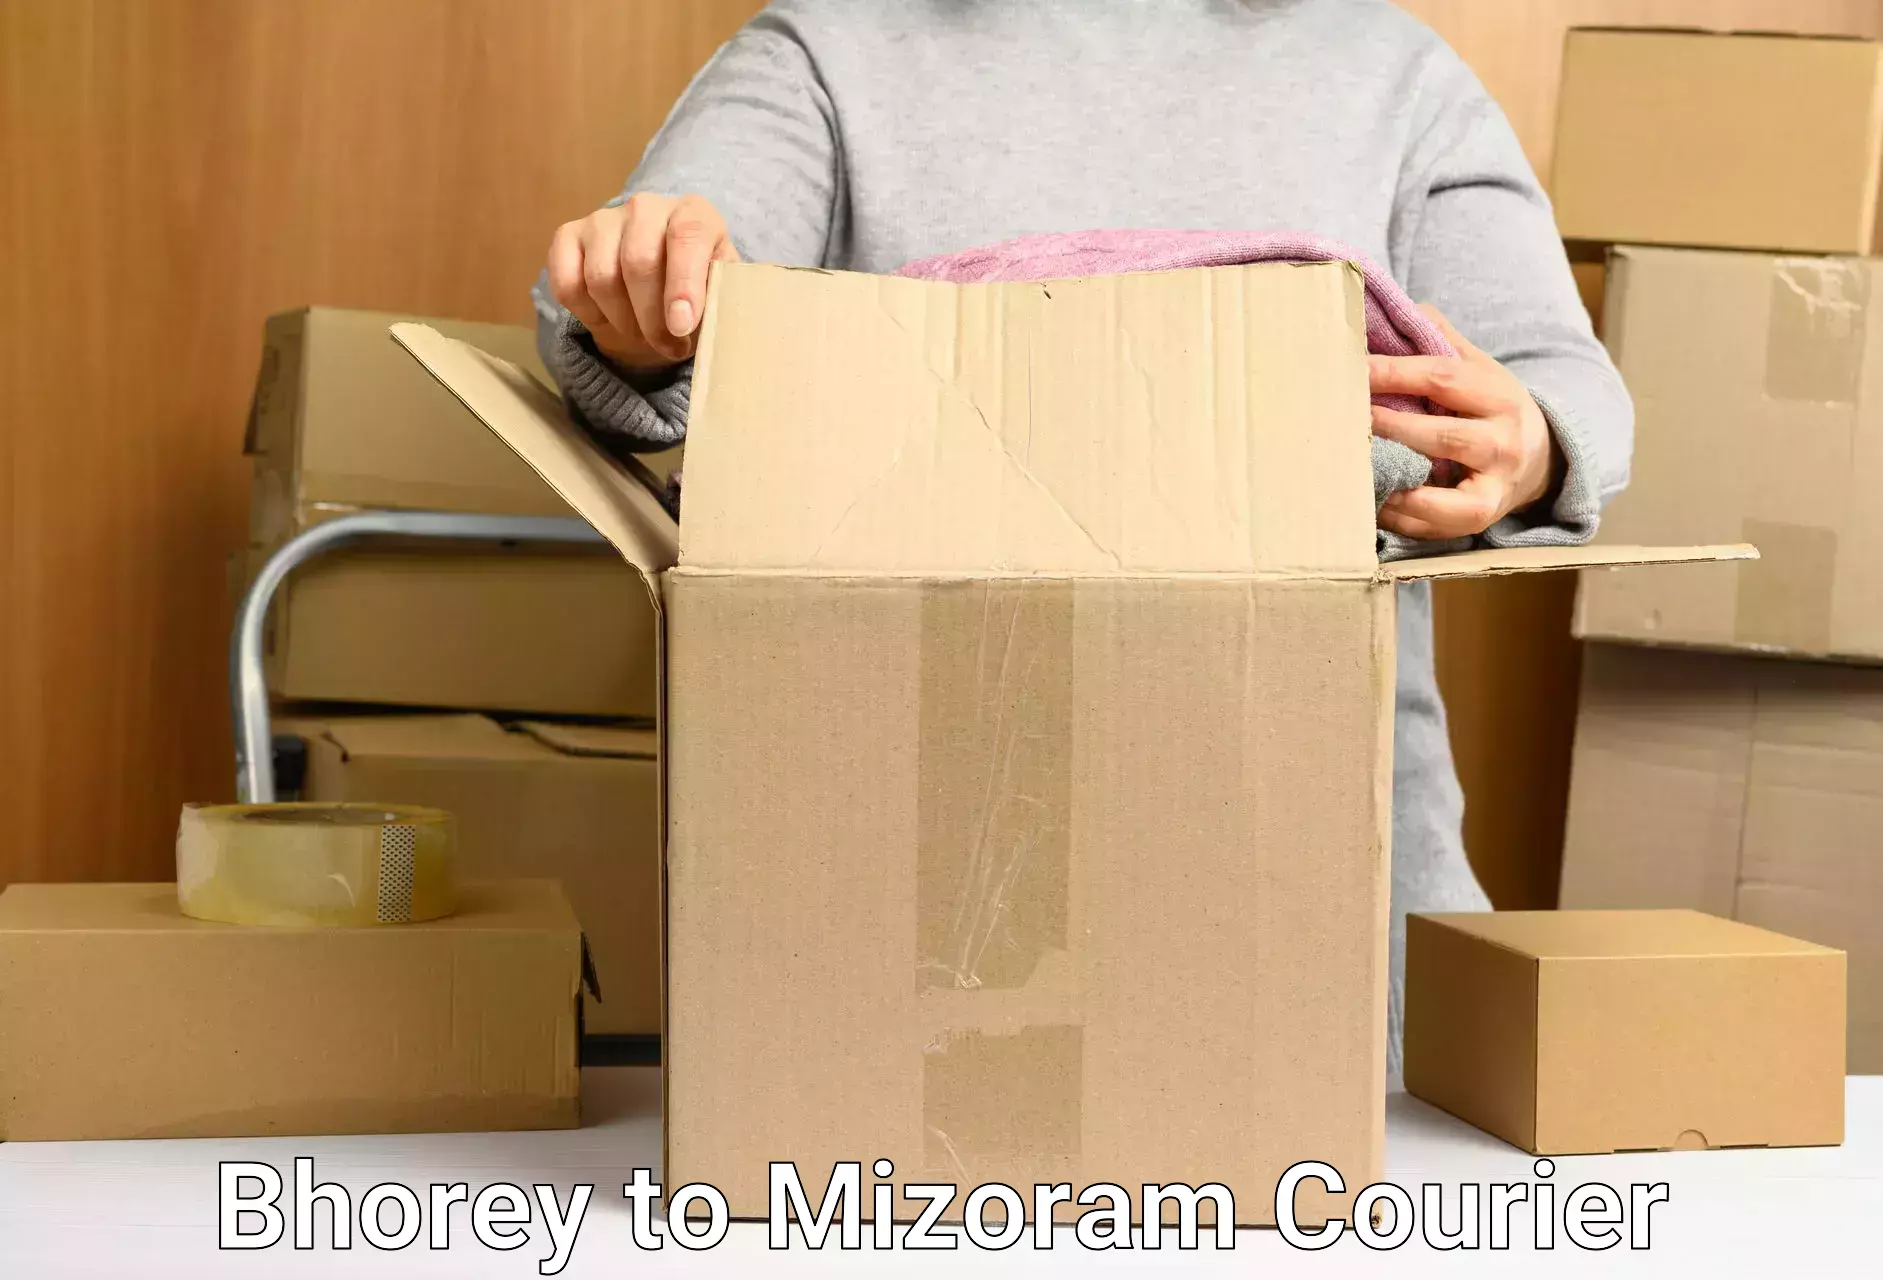 Professional parcel services Bhorey to Mizoram